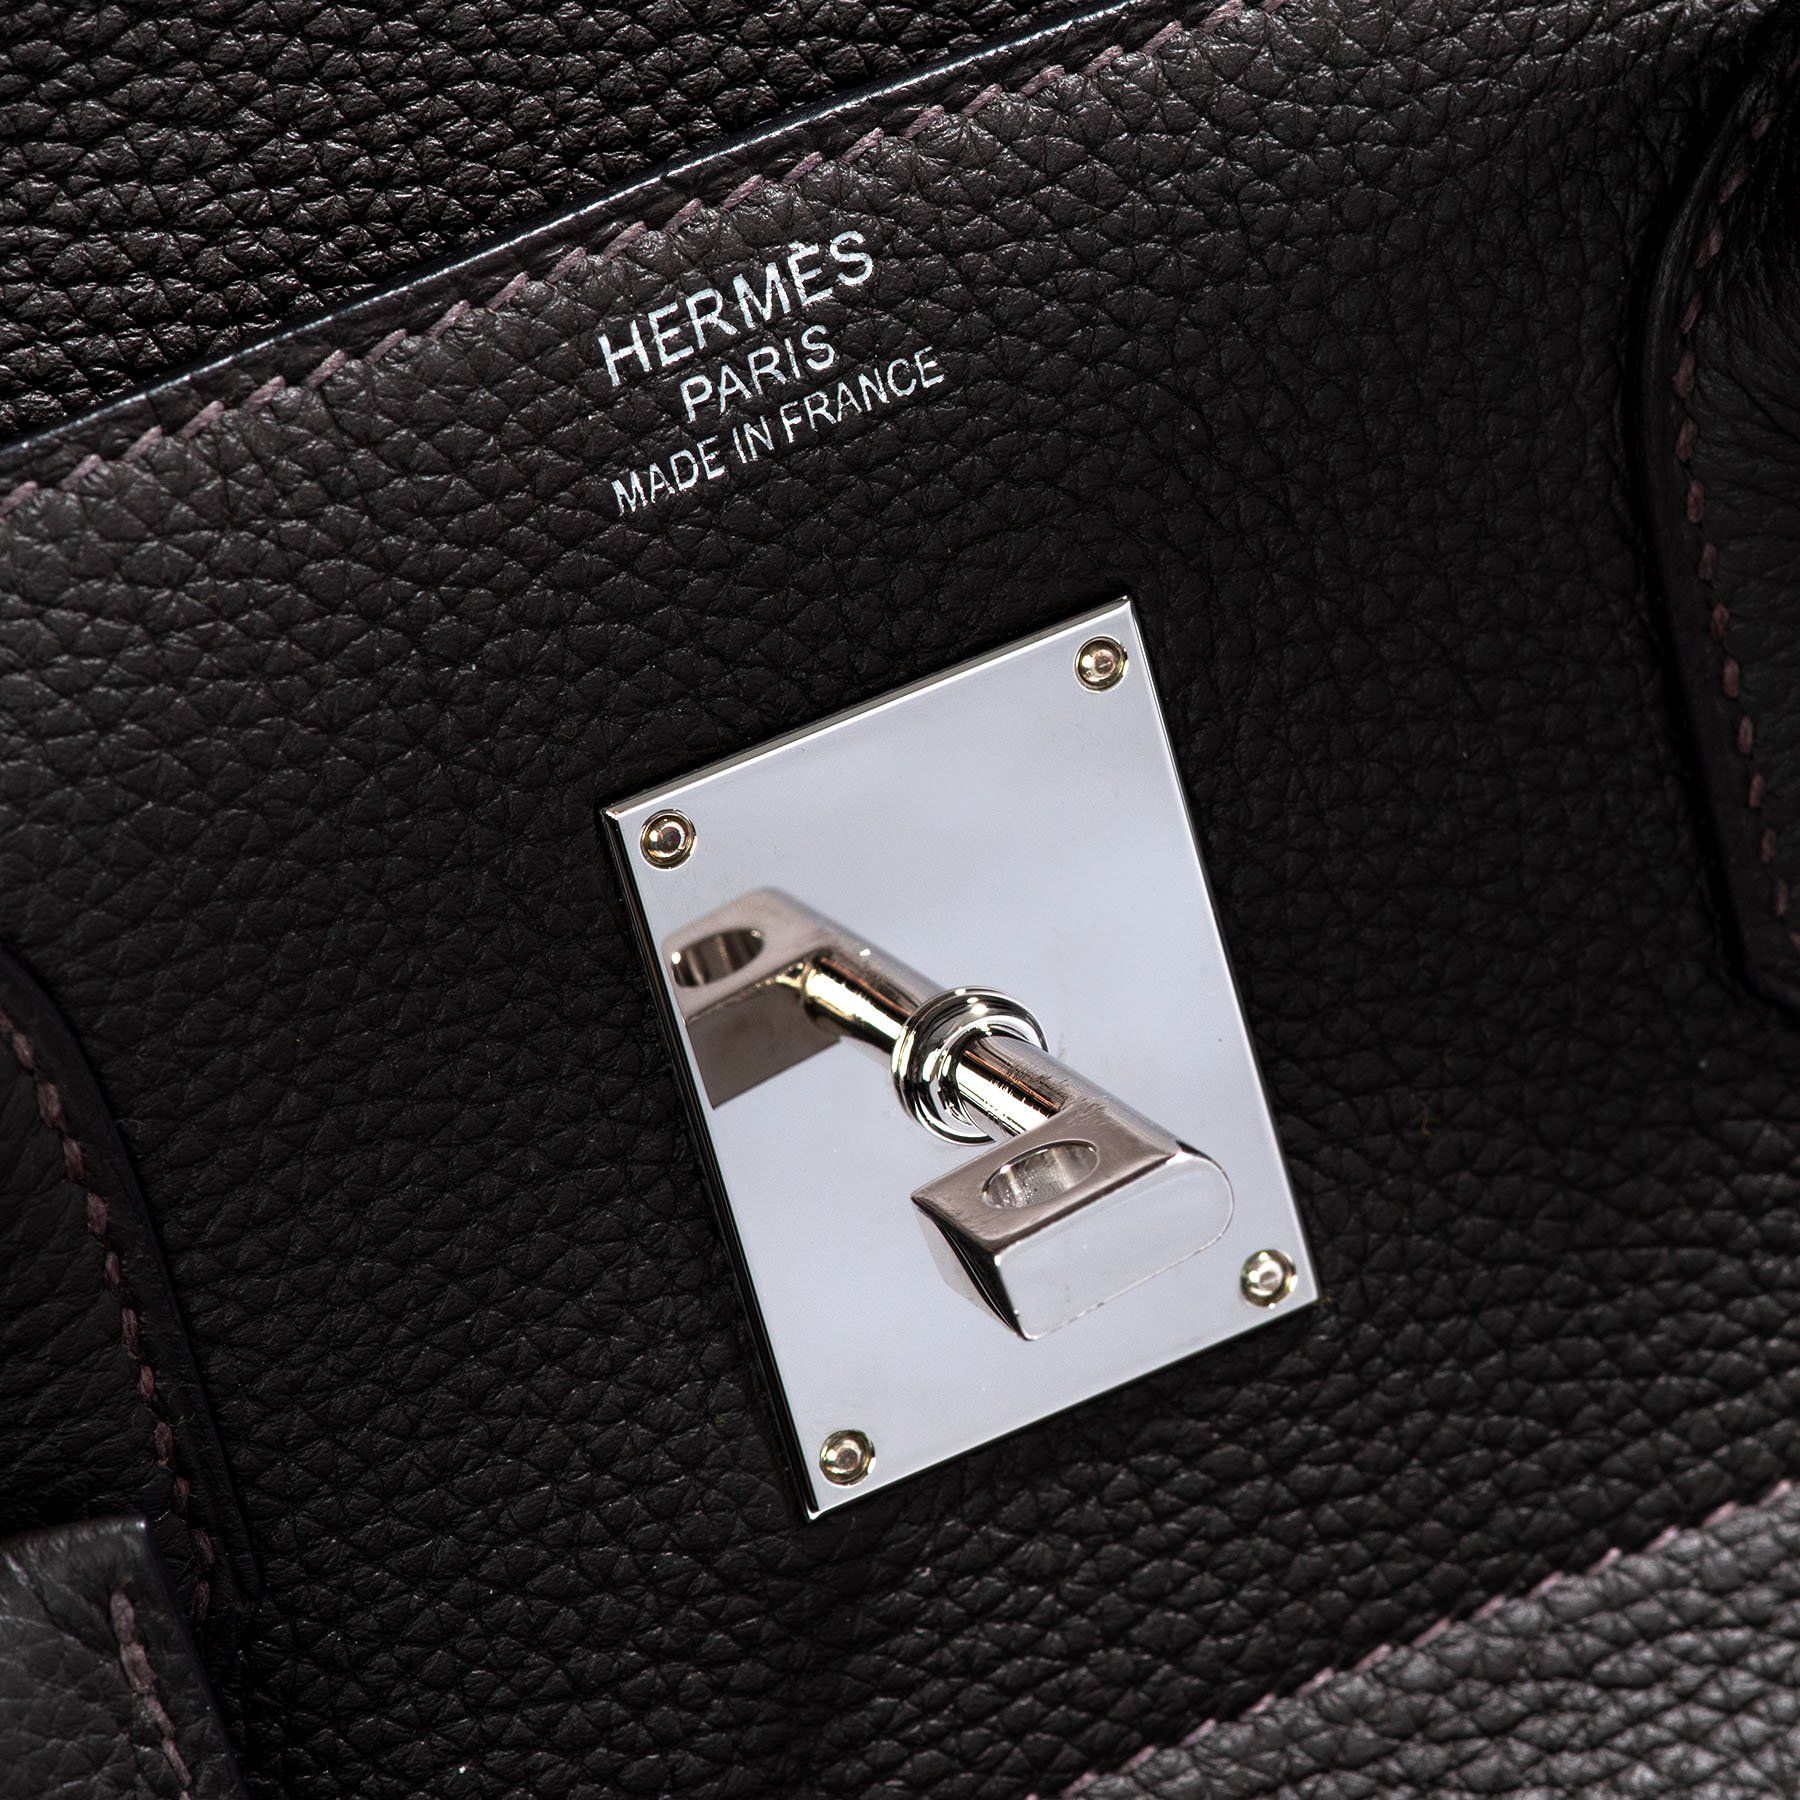 Hermès Sac Haut A Courroies 40 Weekend Bag